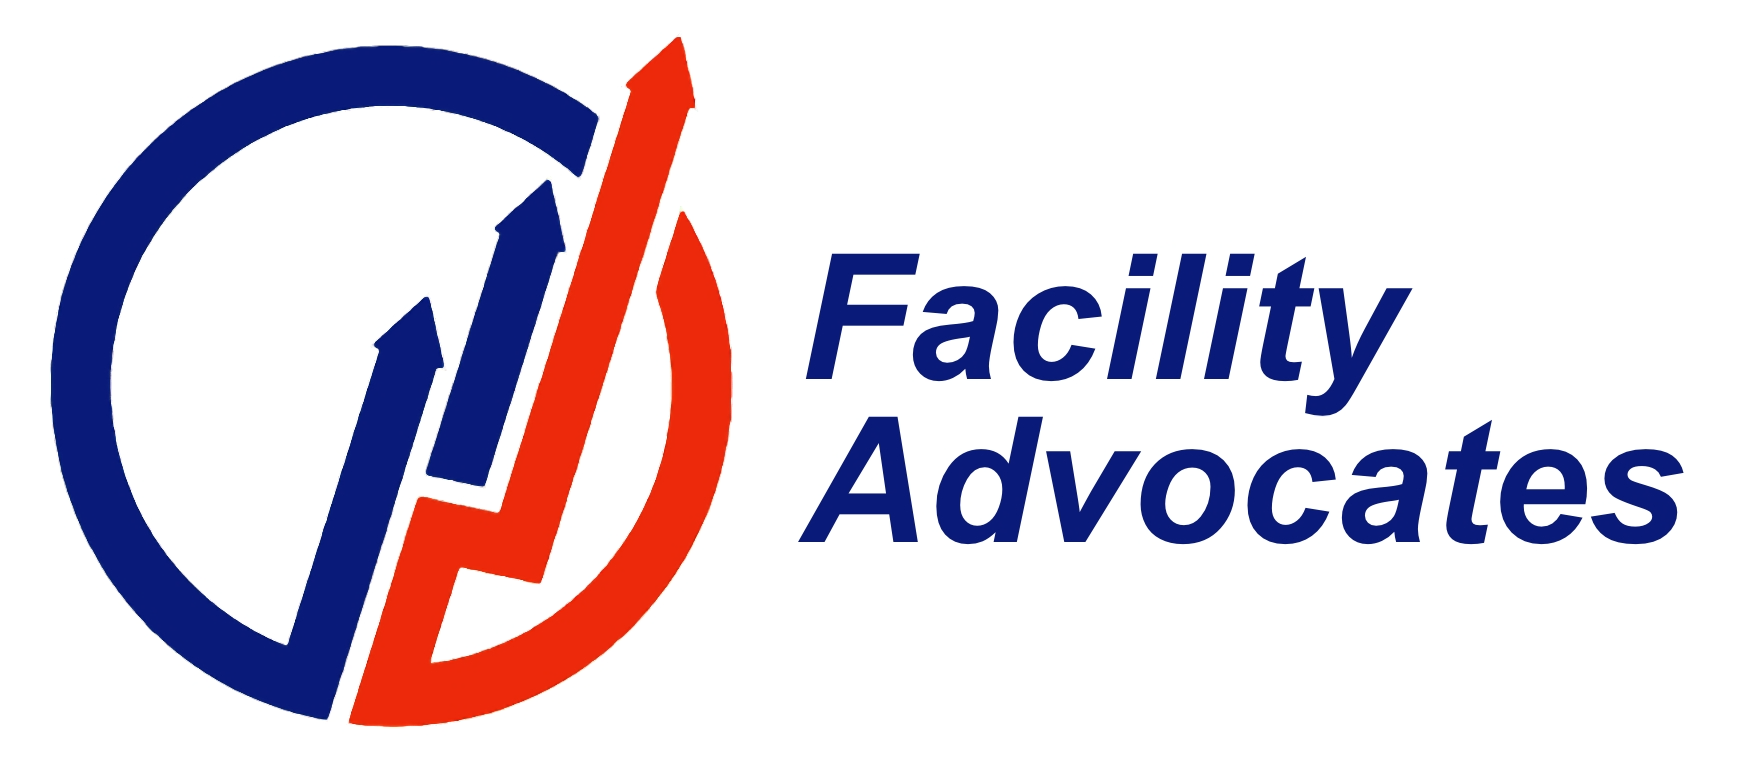 Fcility Advocates Logo